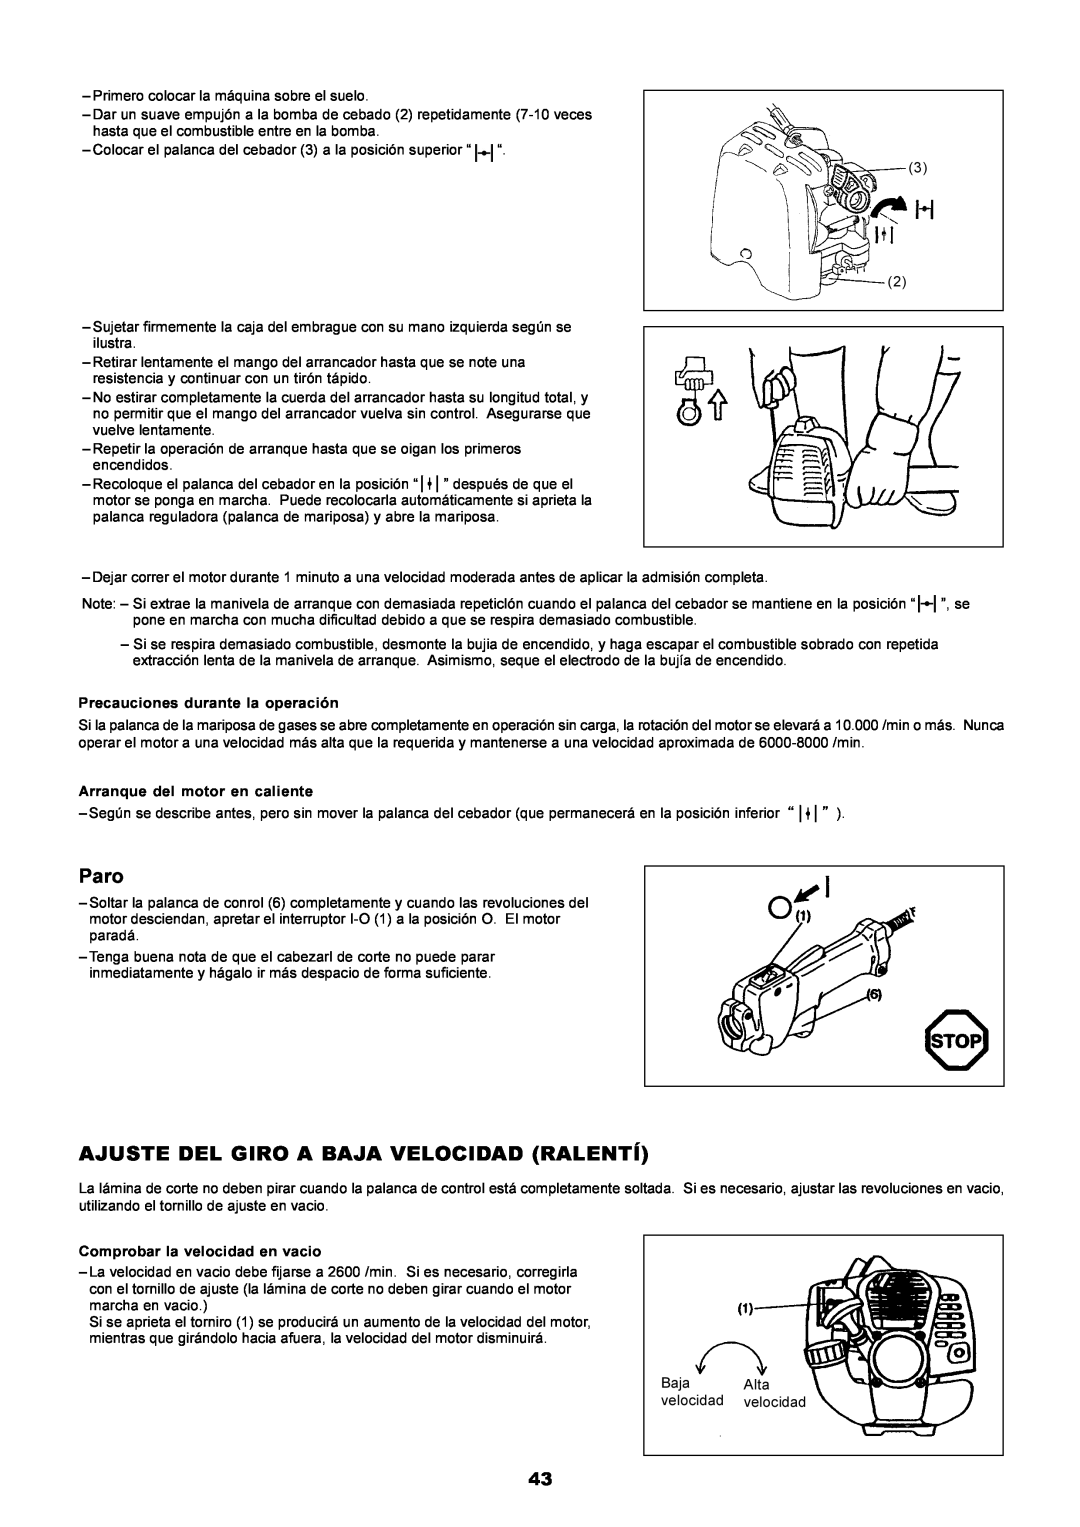 Dolmar PE-251 instruction manual Paro, Ajuste Del Giro A Baja Velocidad Ralentí 